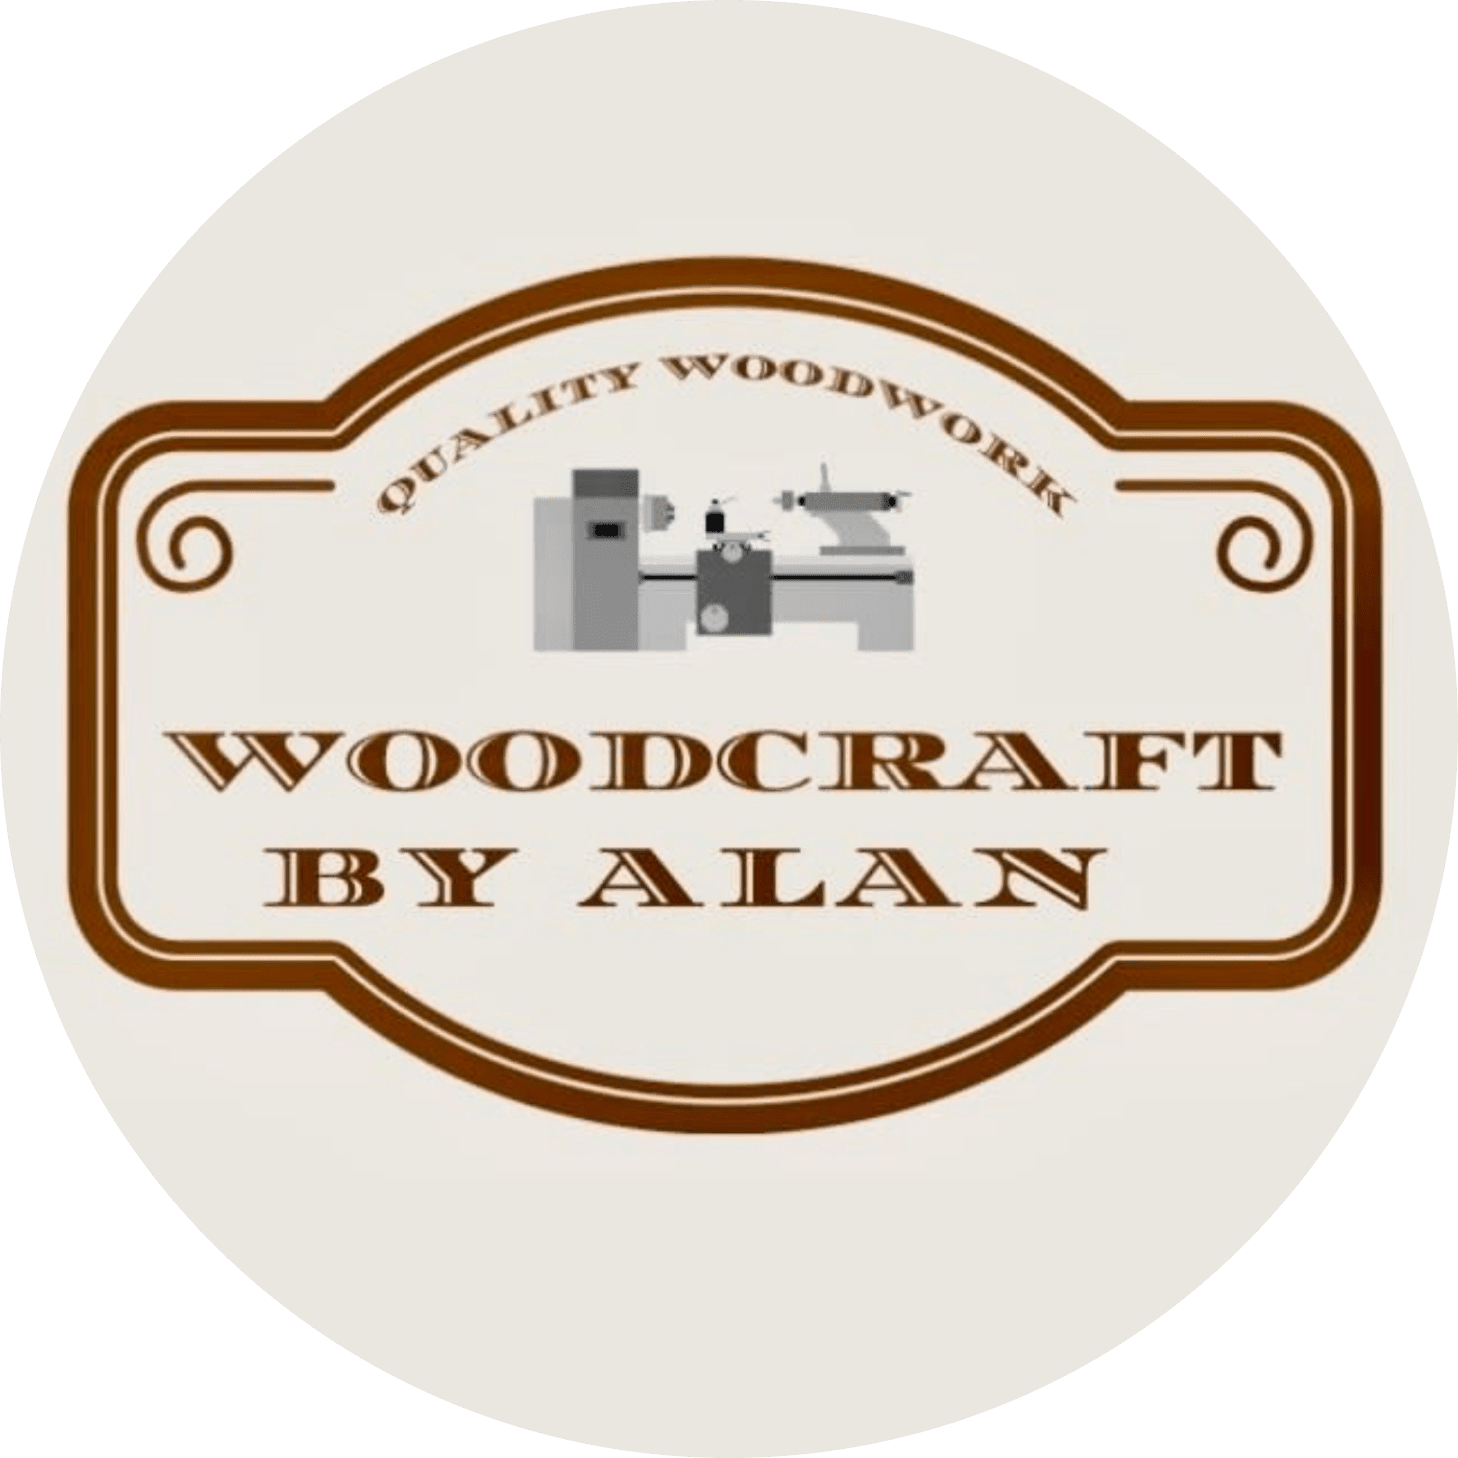 Woodcraft by Alan